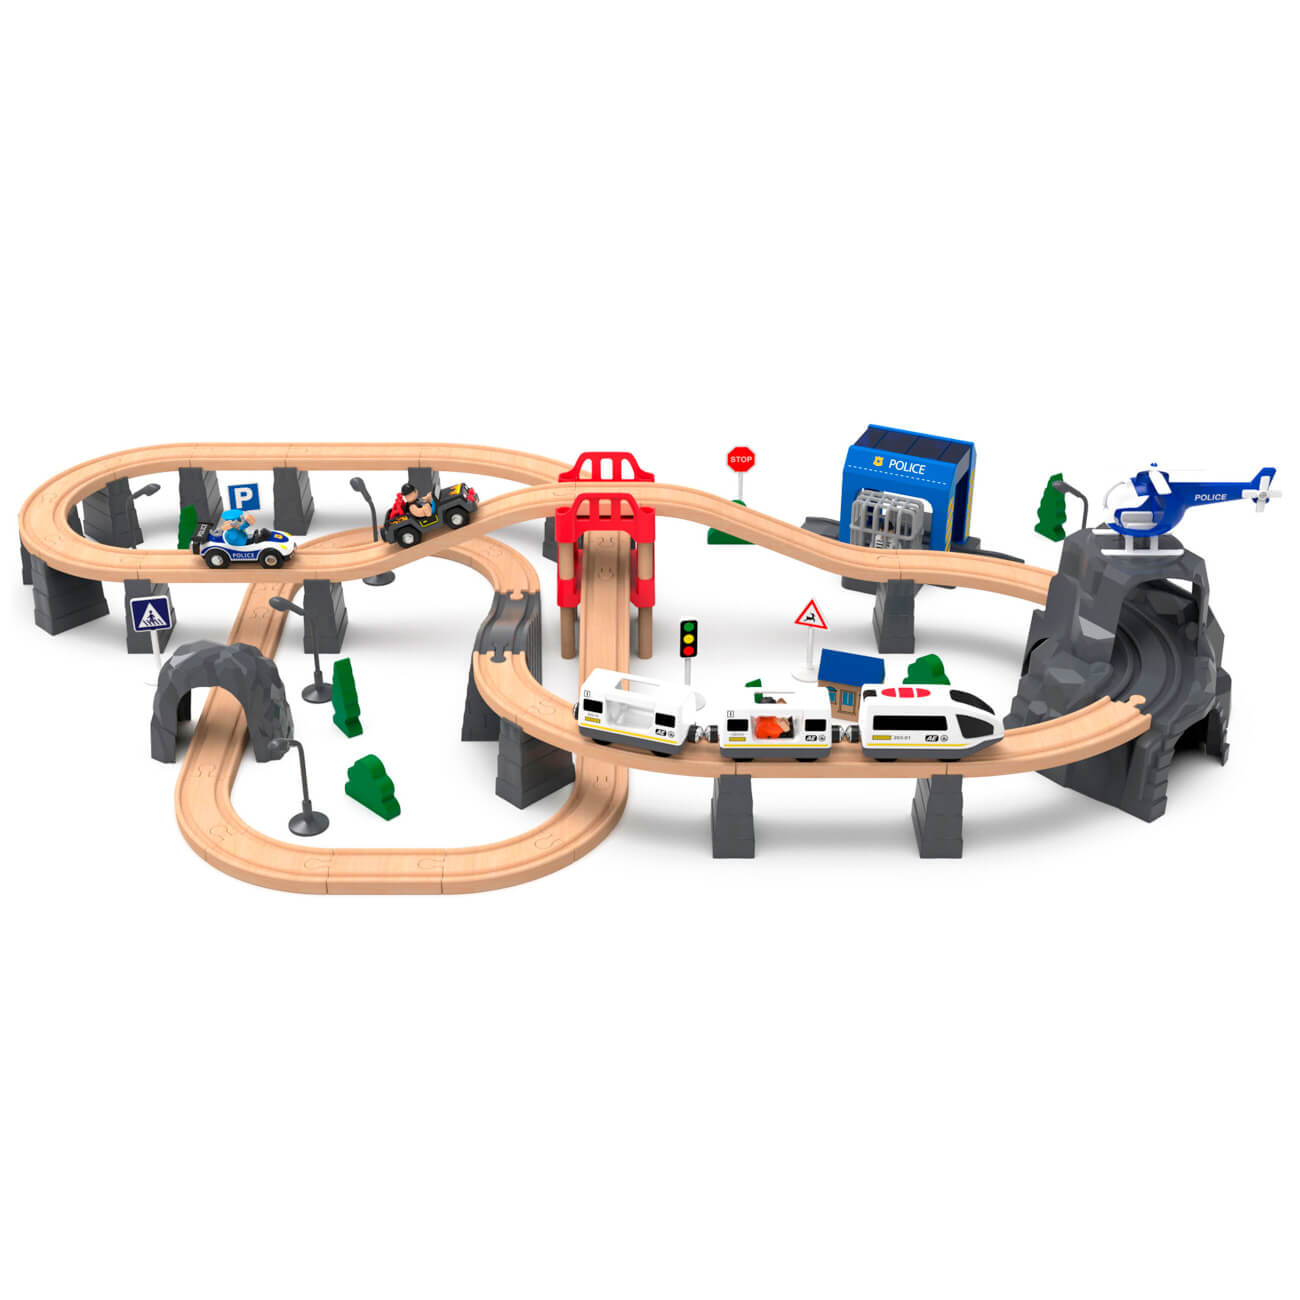 Железная дорога игрушечная, 98 см, дерево/пластик, Электропоезд, Game rail железная дорога mehano ave